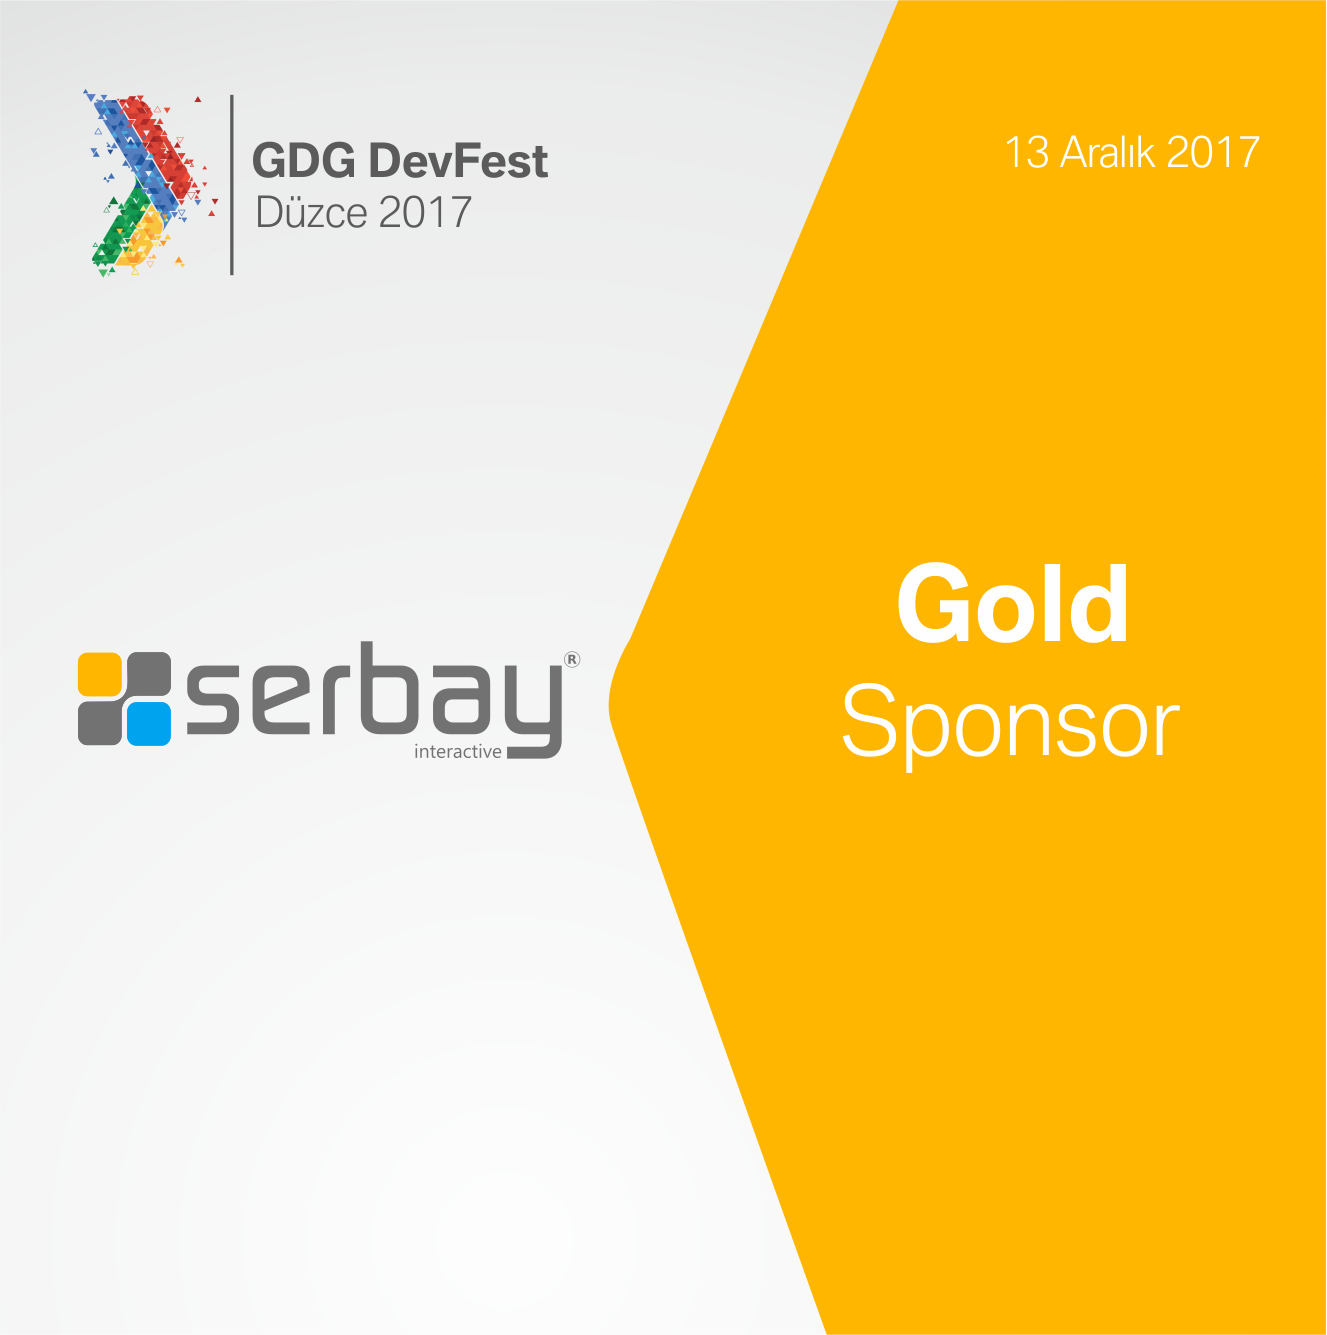 GDG DevFest Düzce 2017 Gold Sponsor: Serbay Interactive